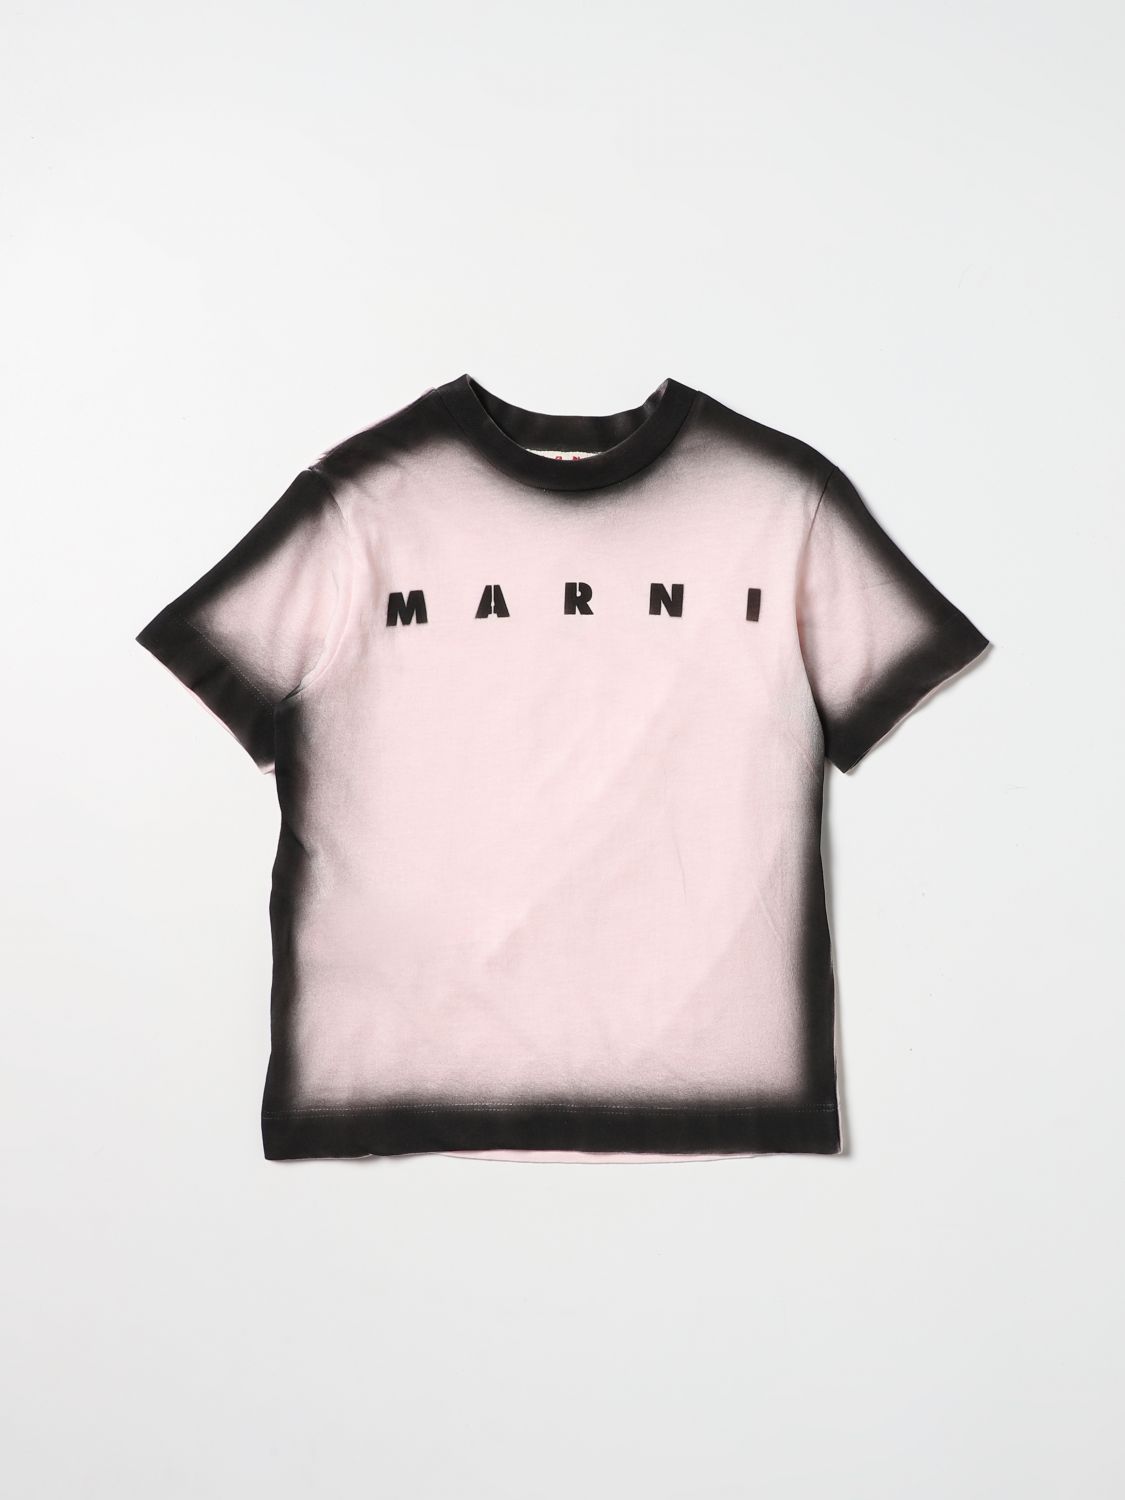 Marni t-shirt for boys